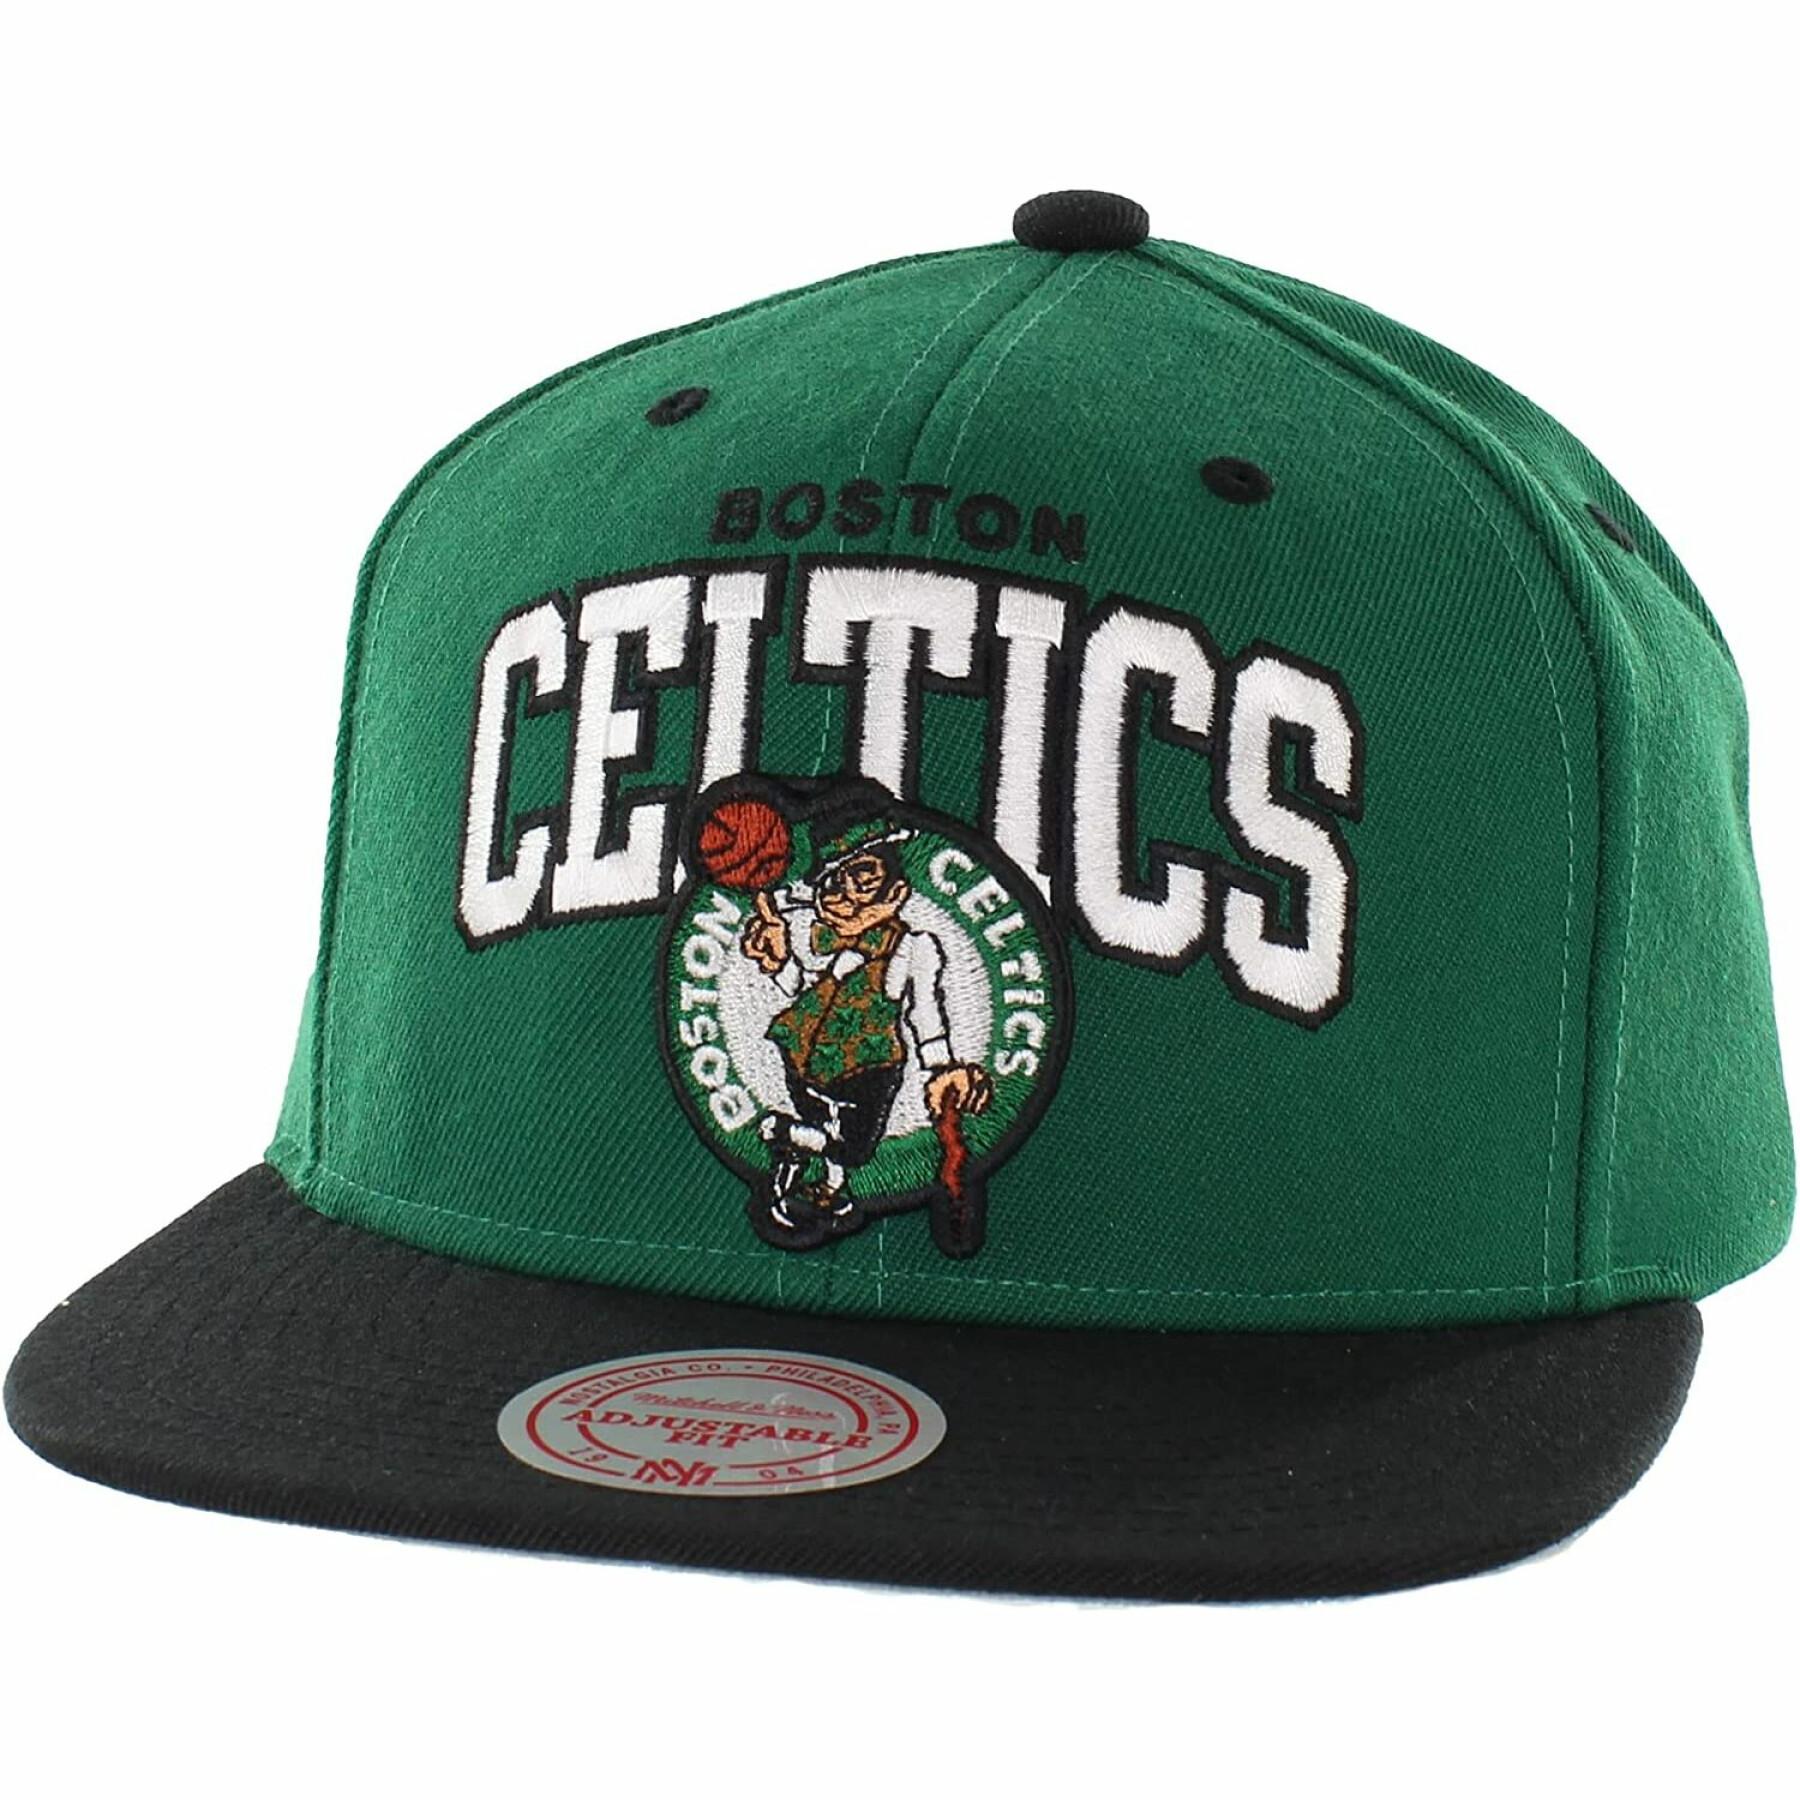 Cap Boston Celtics team arch